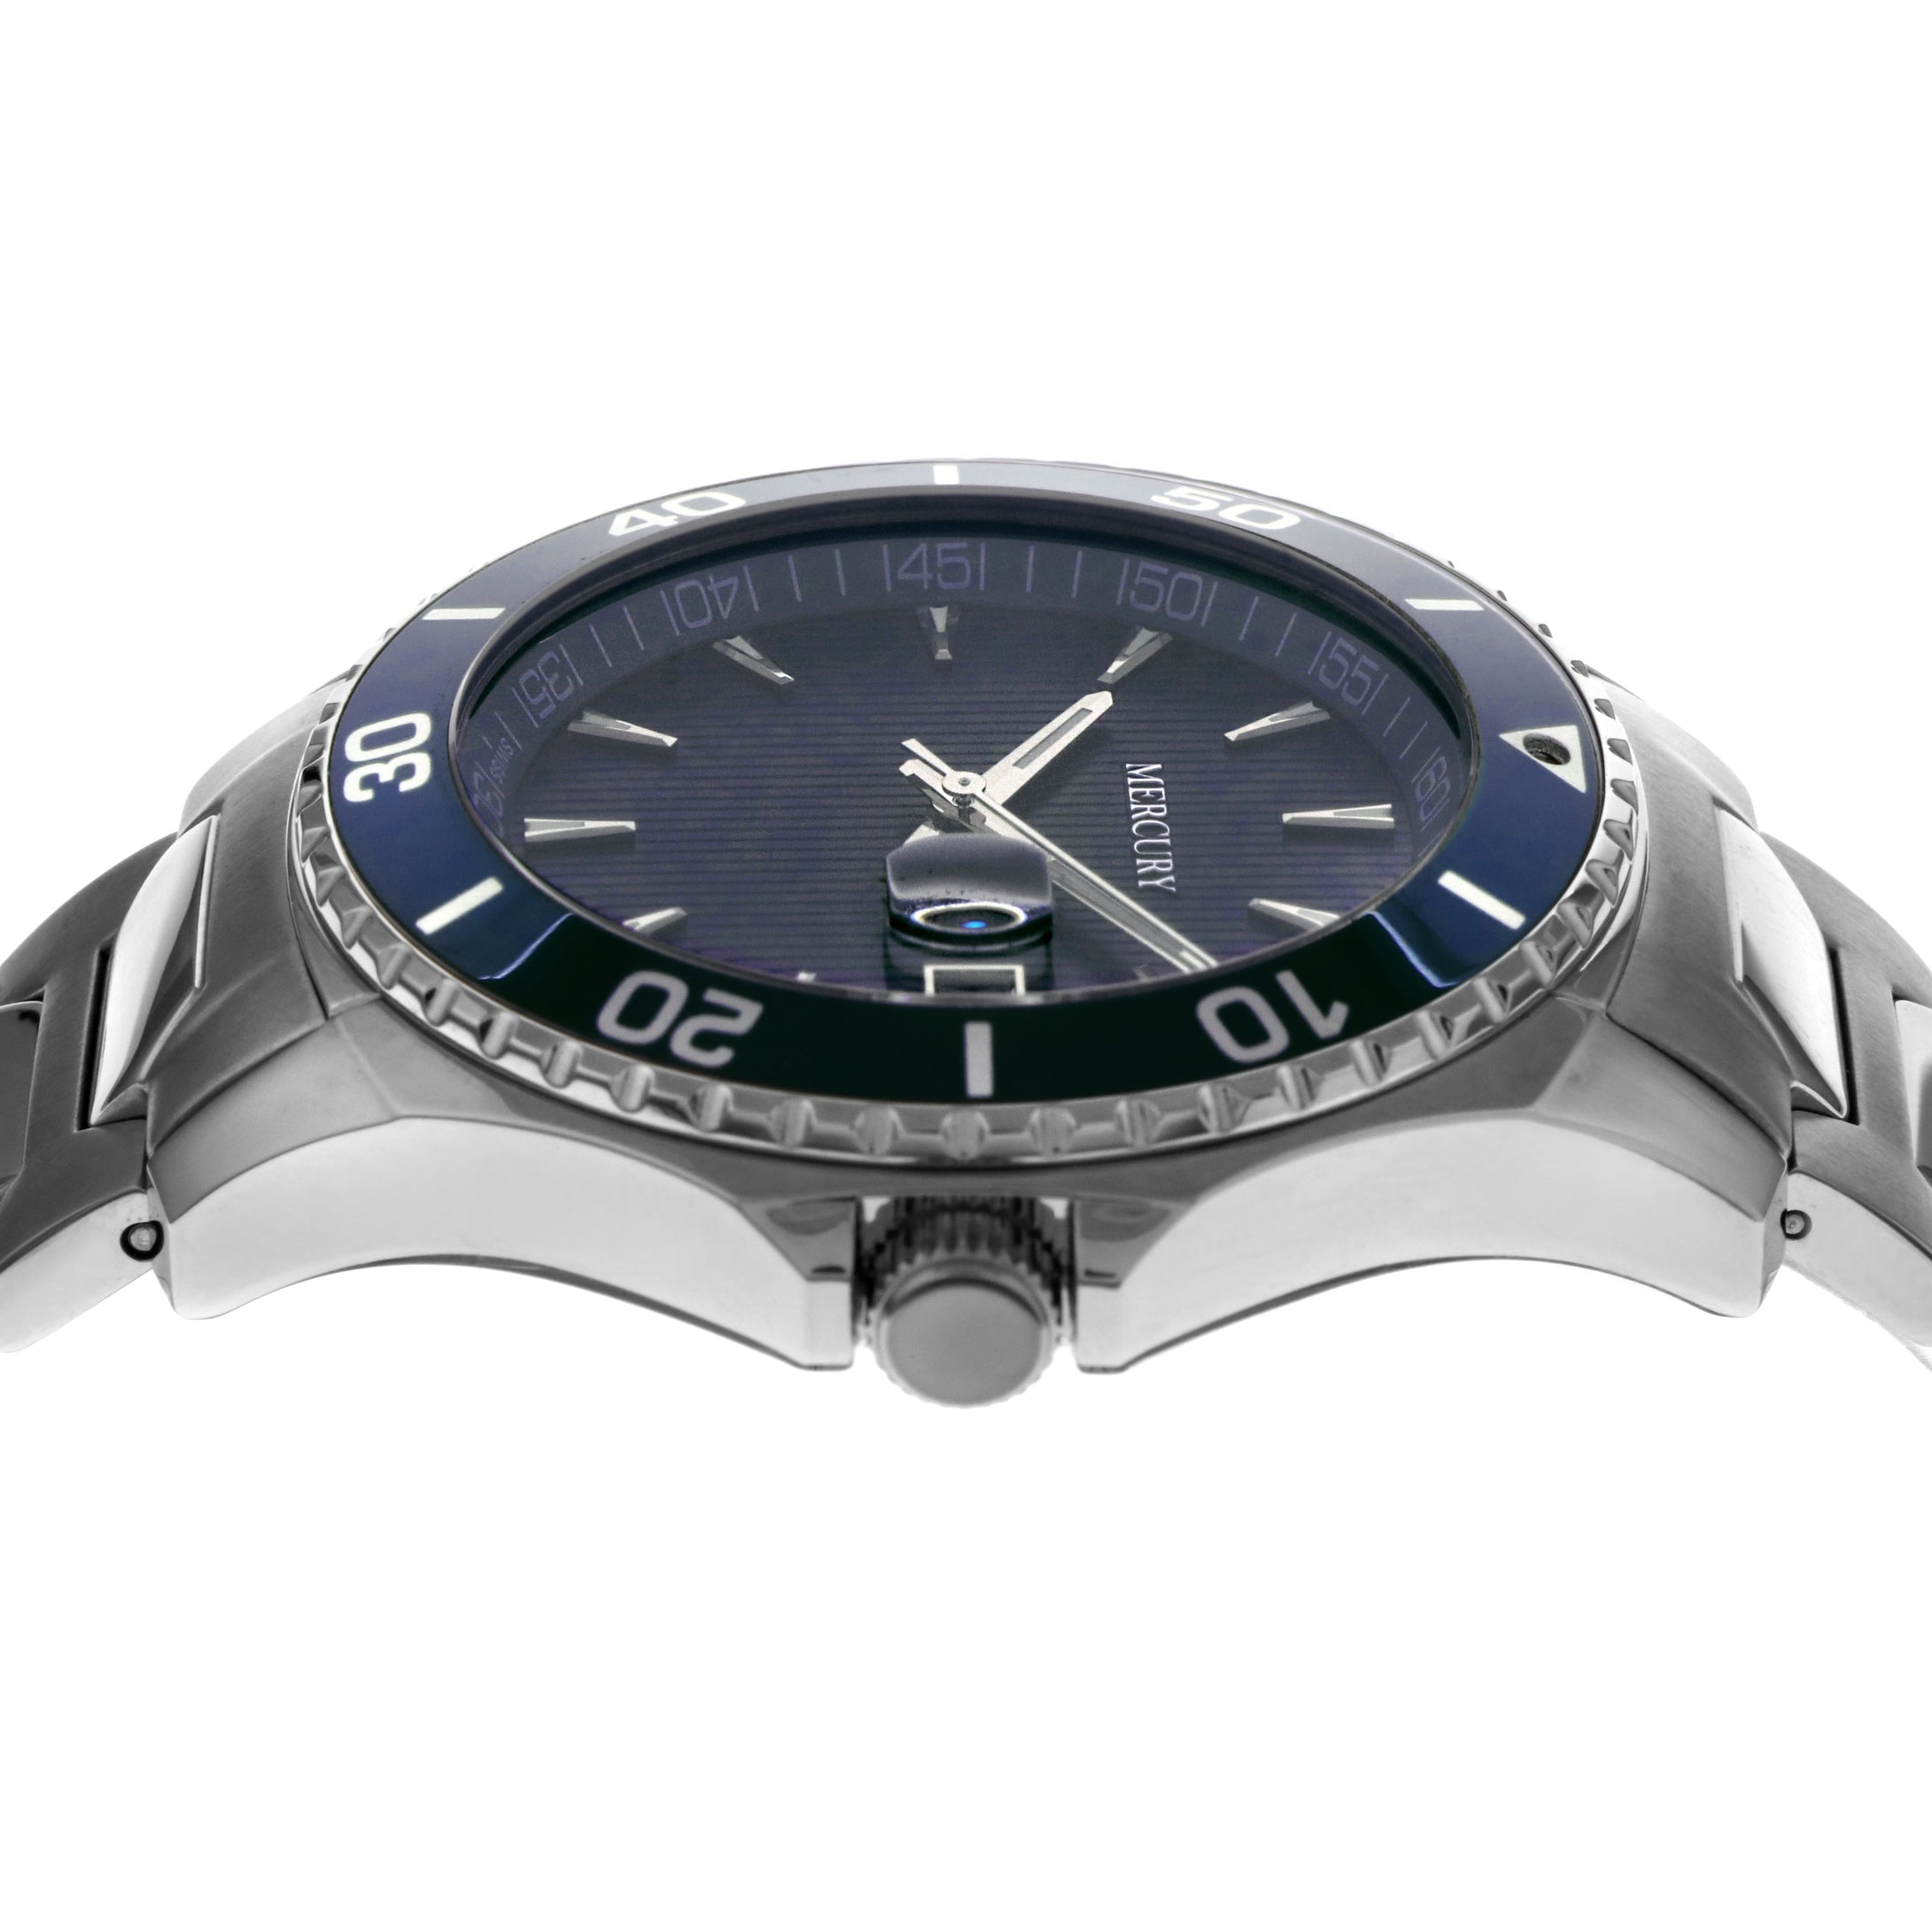 Mercury Men's Swiss Quartz Watch with Blue Dial - MER-0040